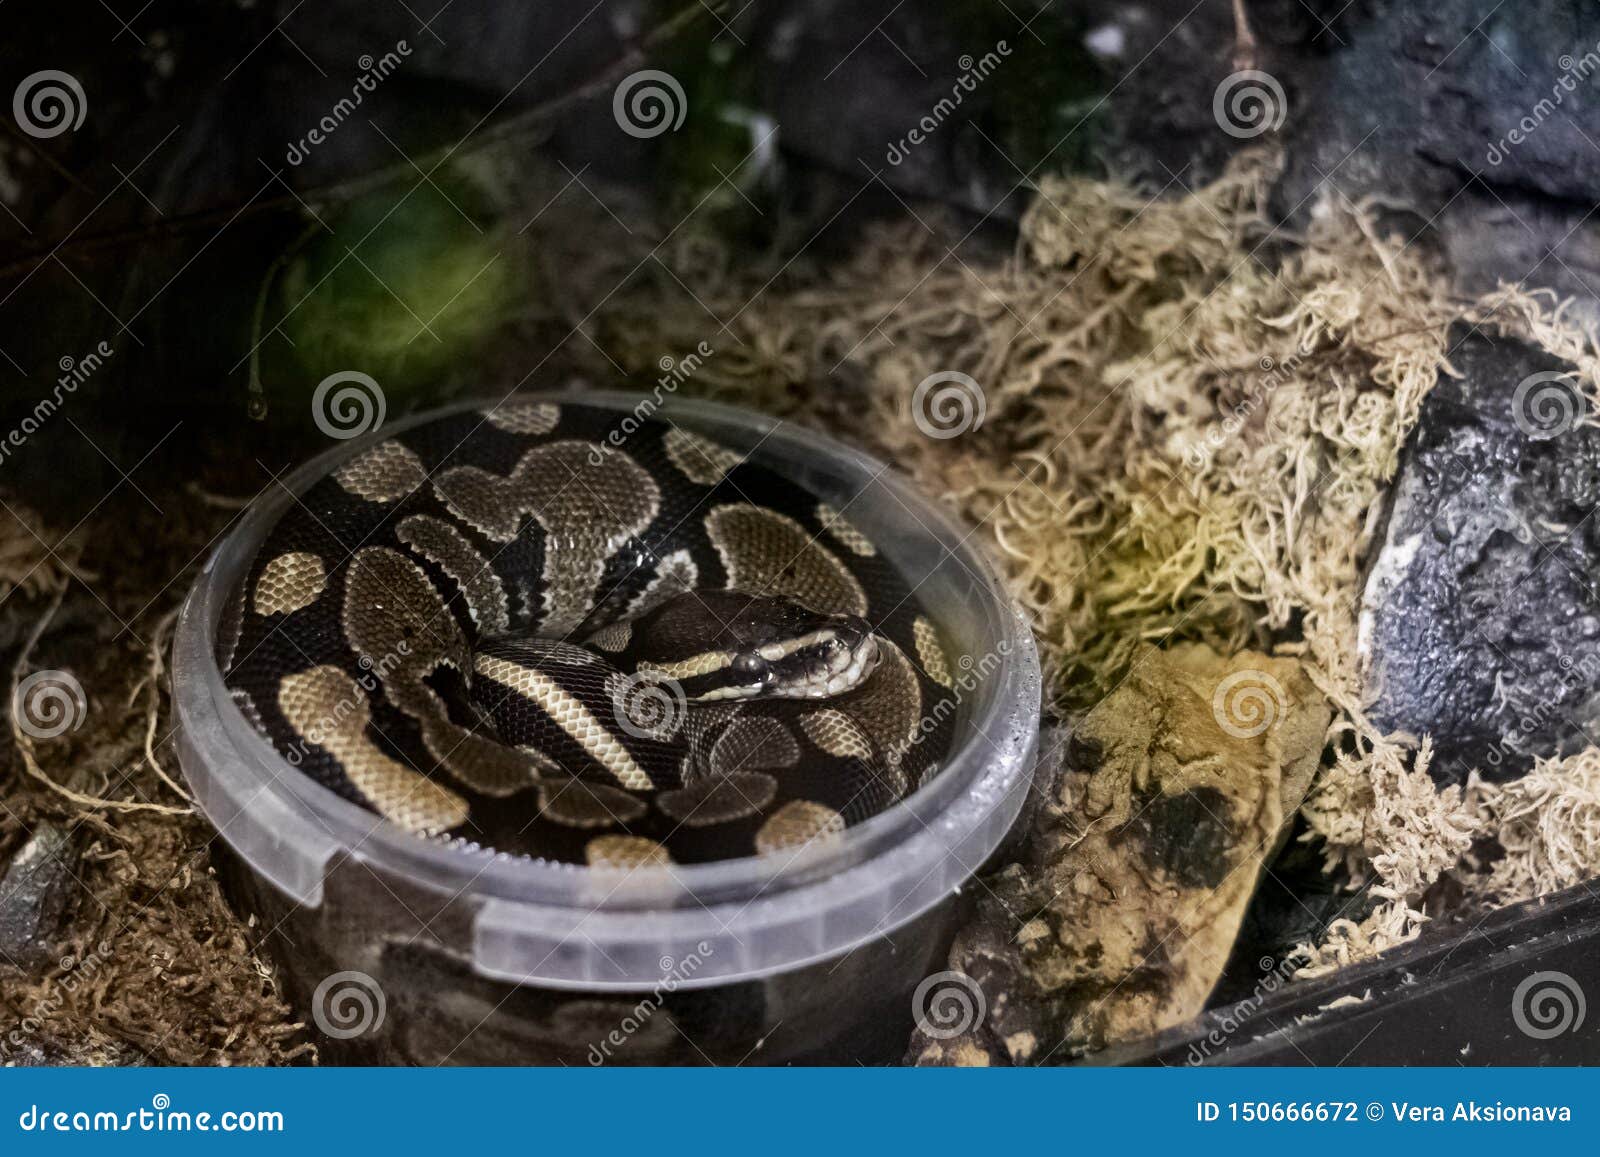 large plastic snake